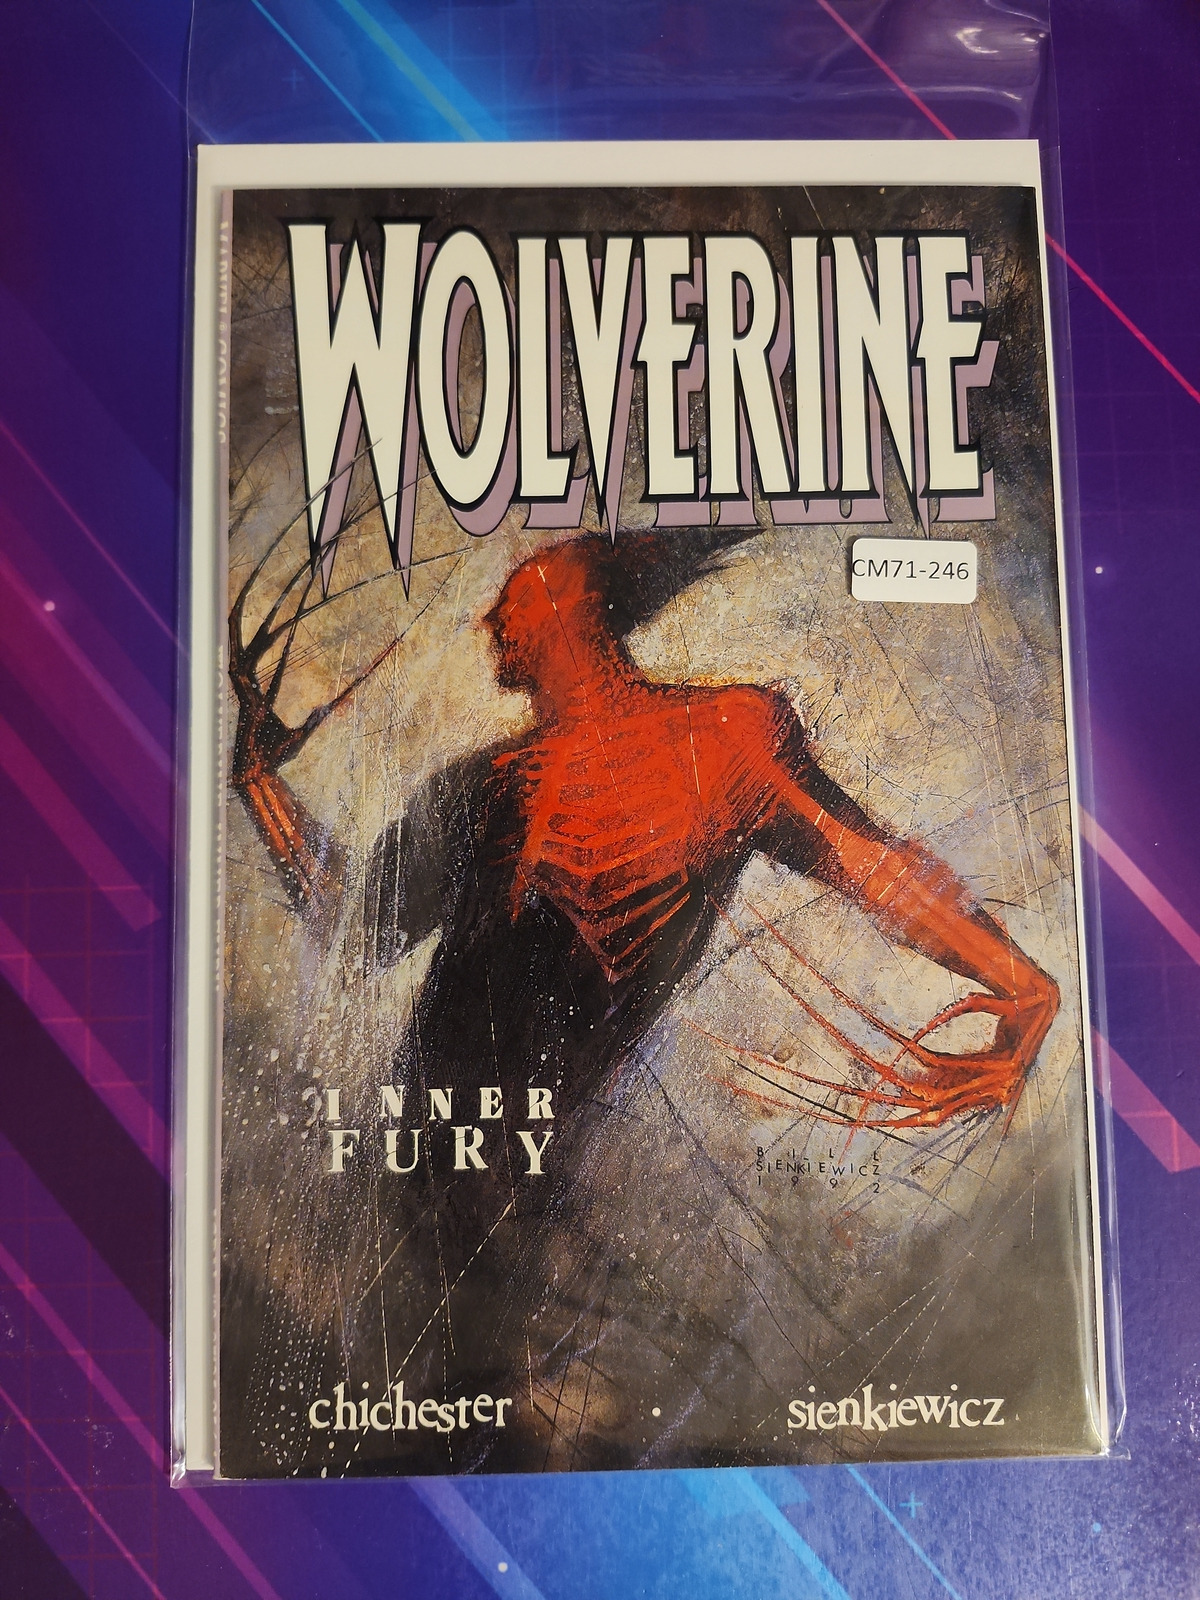 WOLVERINE: INNER FURY #1 ONE-SHOT HIGH GRADE MARVEL COMIC BOOK CM71-246